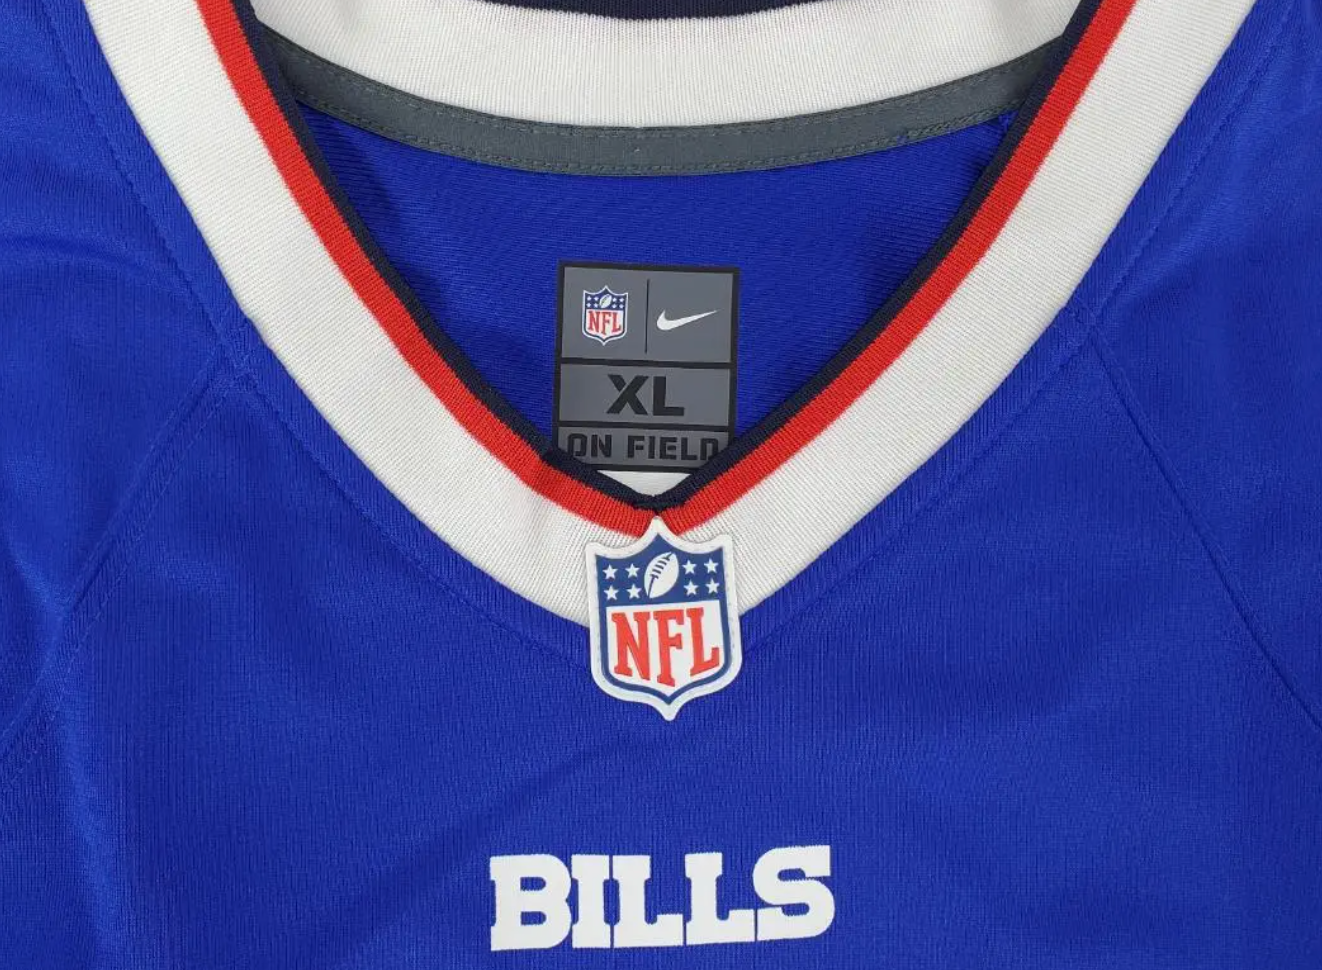 Josh Allen Signed Buffalo Bills Nike NFL Replica Game Jersey (Beckett Witness Certified)